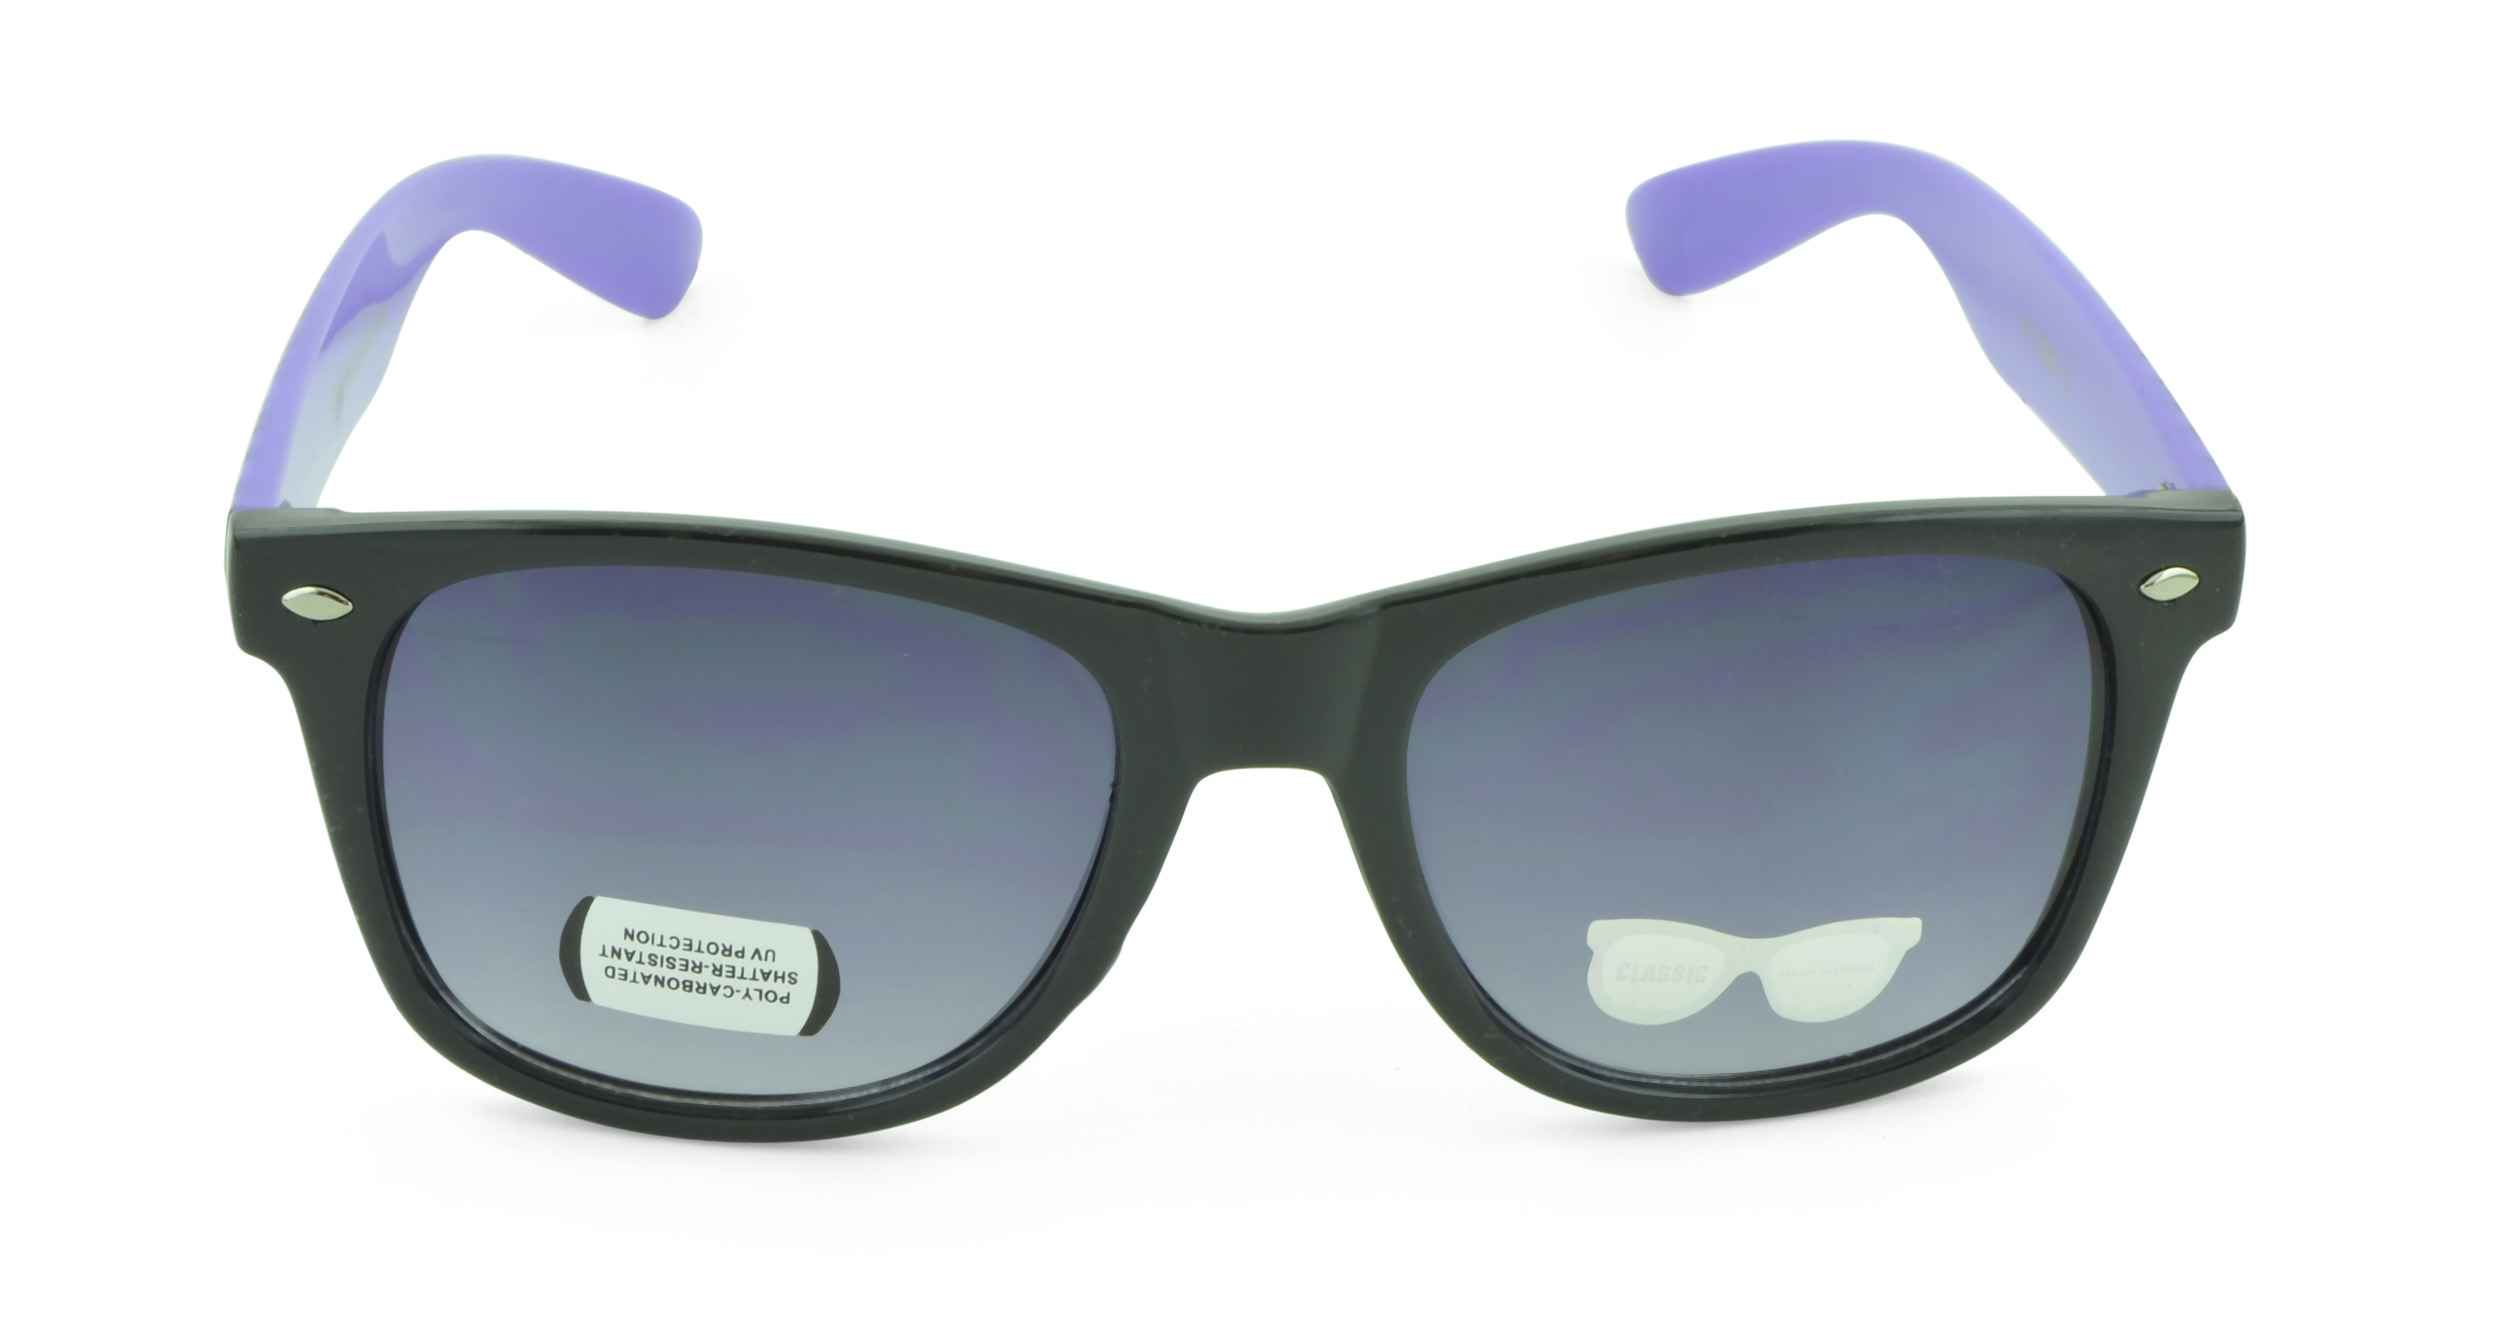 Belle Donne - Wayfarer Style Sunglasses Trendy Cheap Sunglasses High Quality Animal Print - Purple 